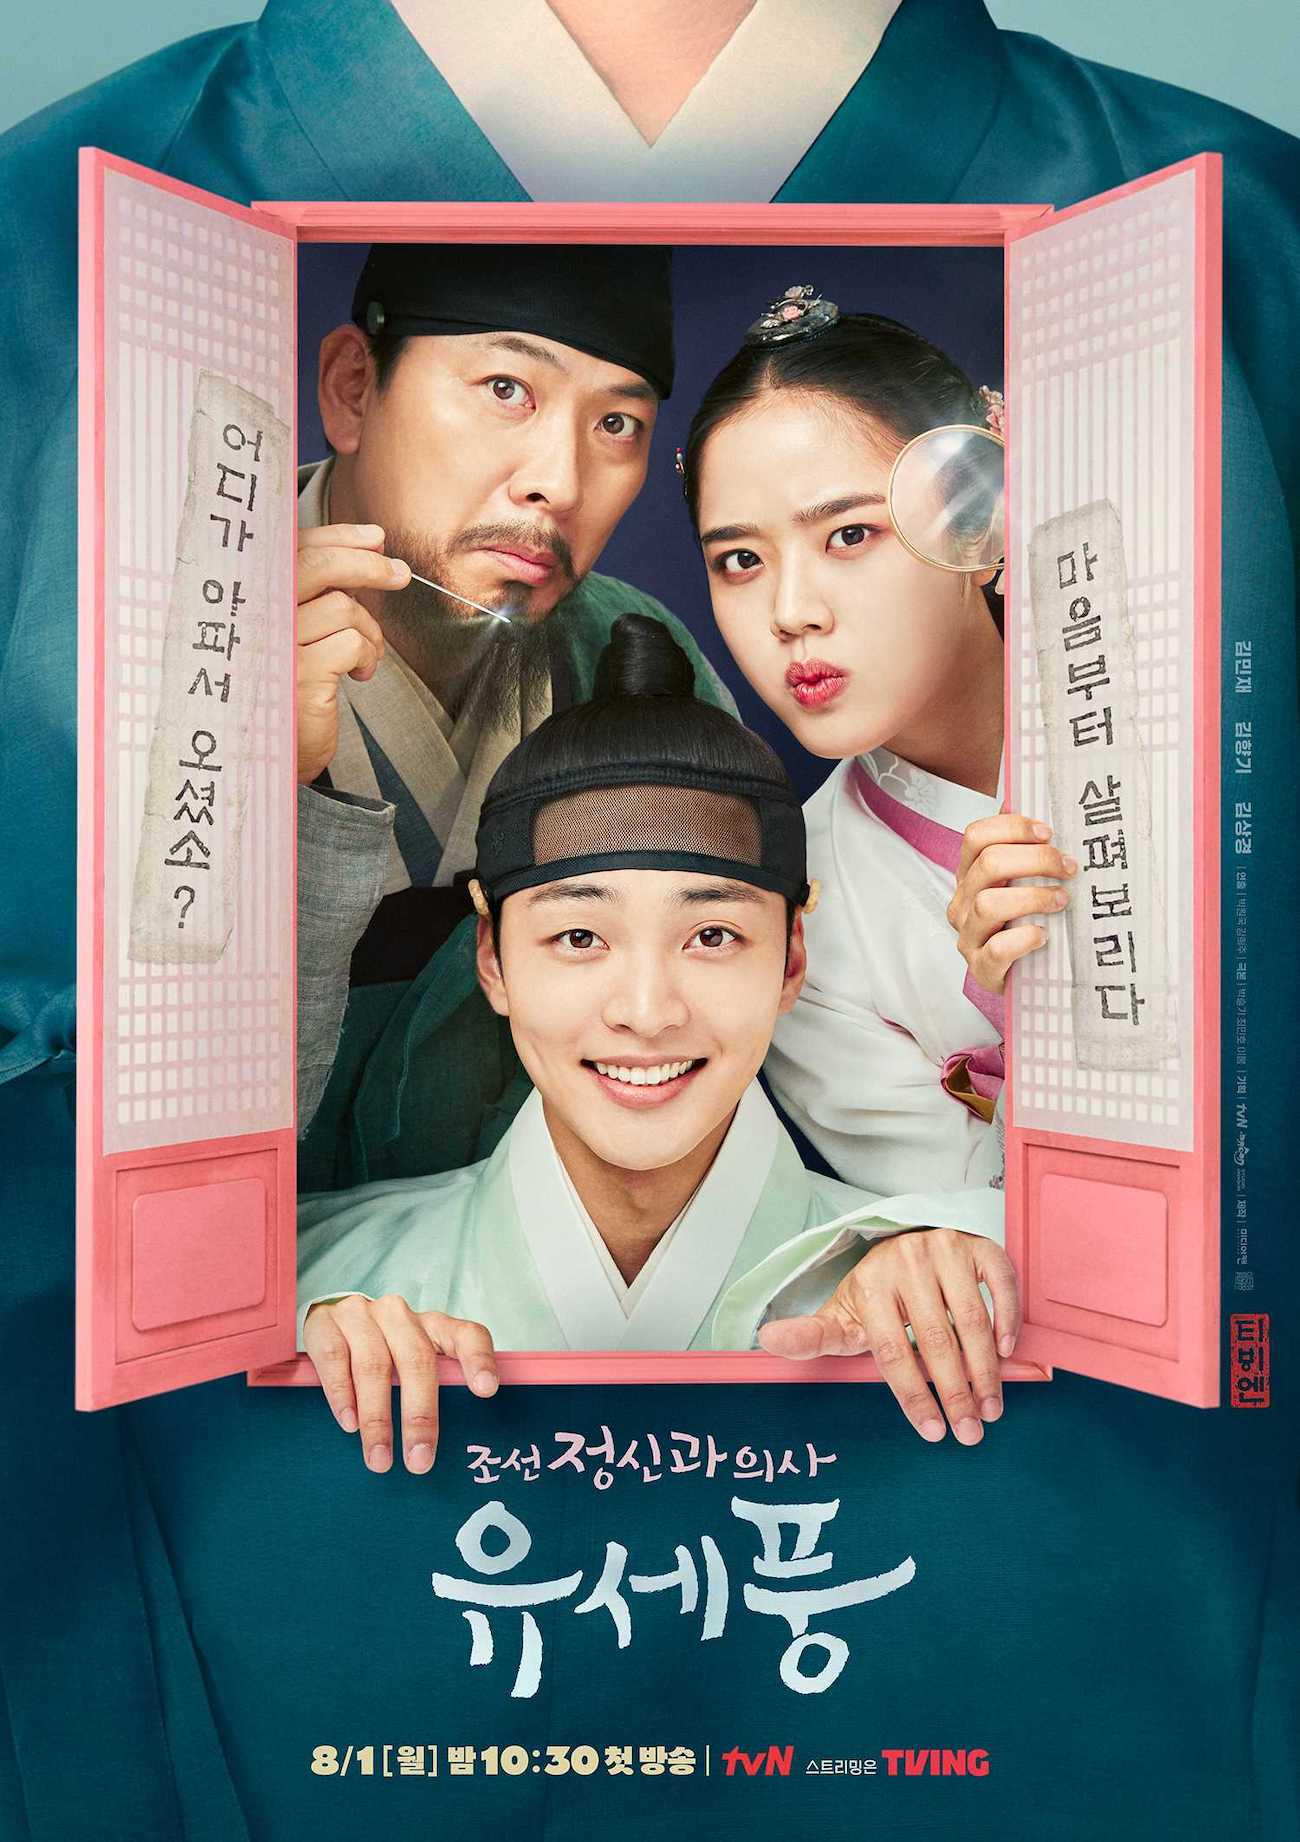 Poong the Joseon Psychiatrist season 1